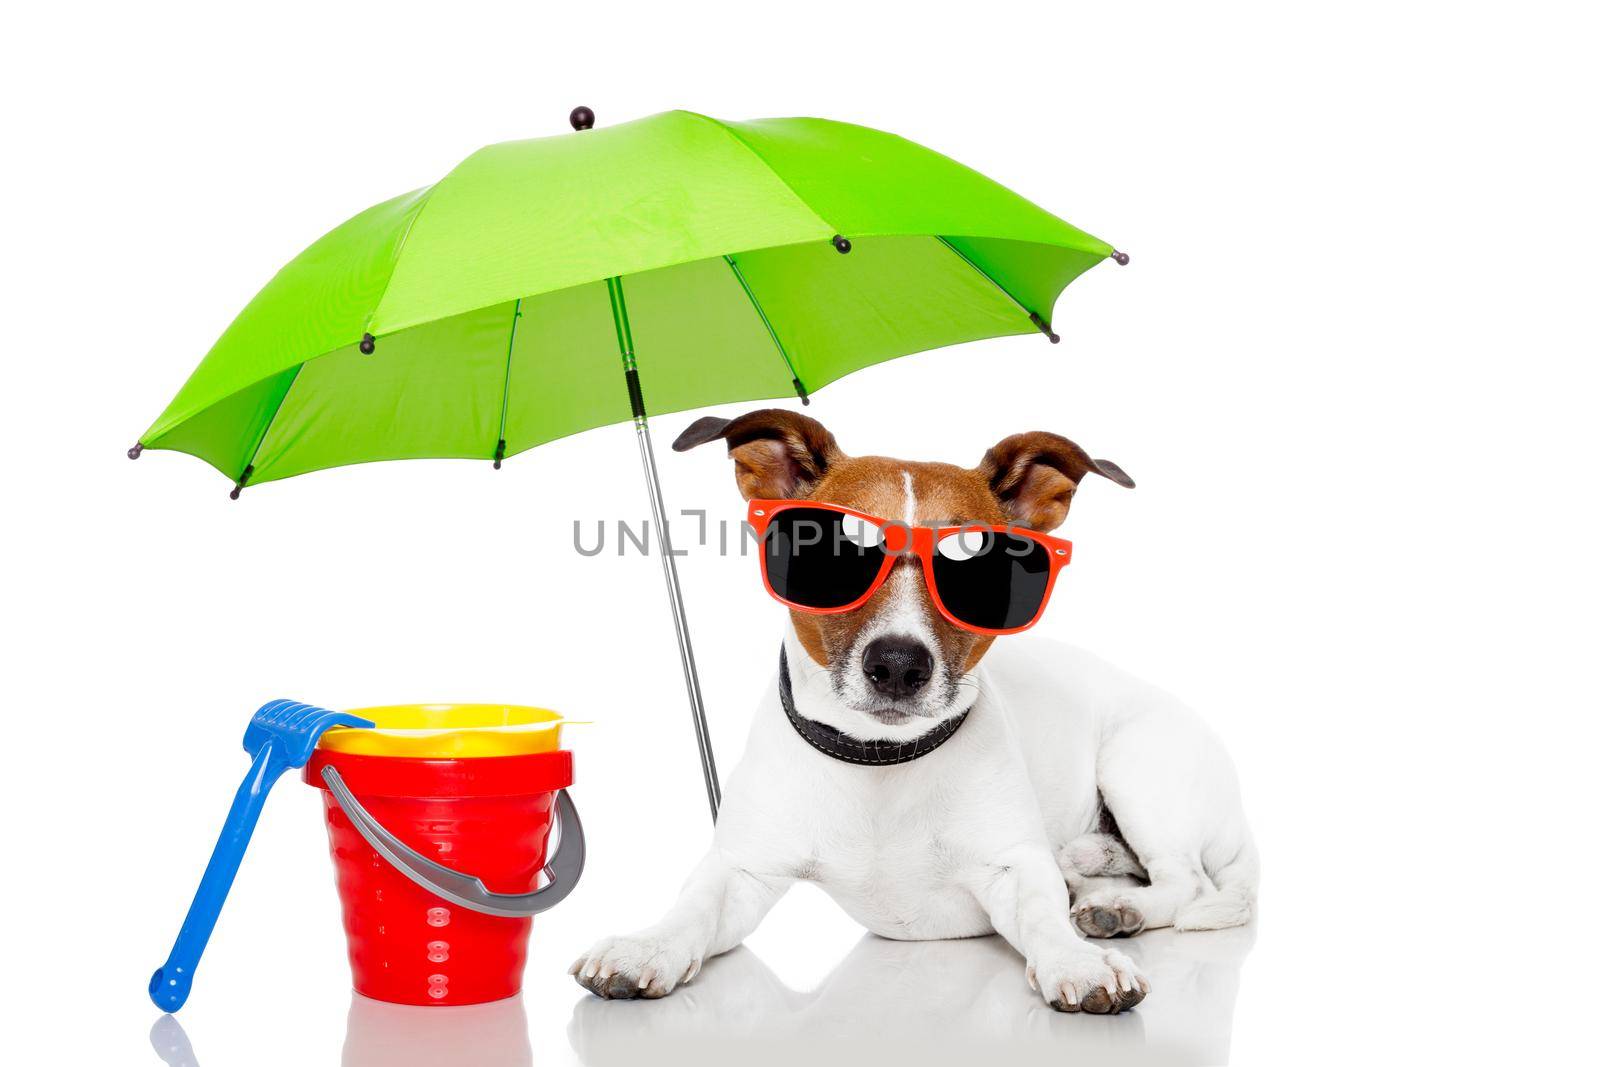 dog sunbathing with umbrella by Brosch